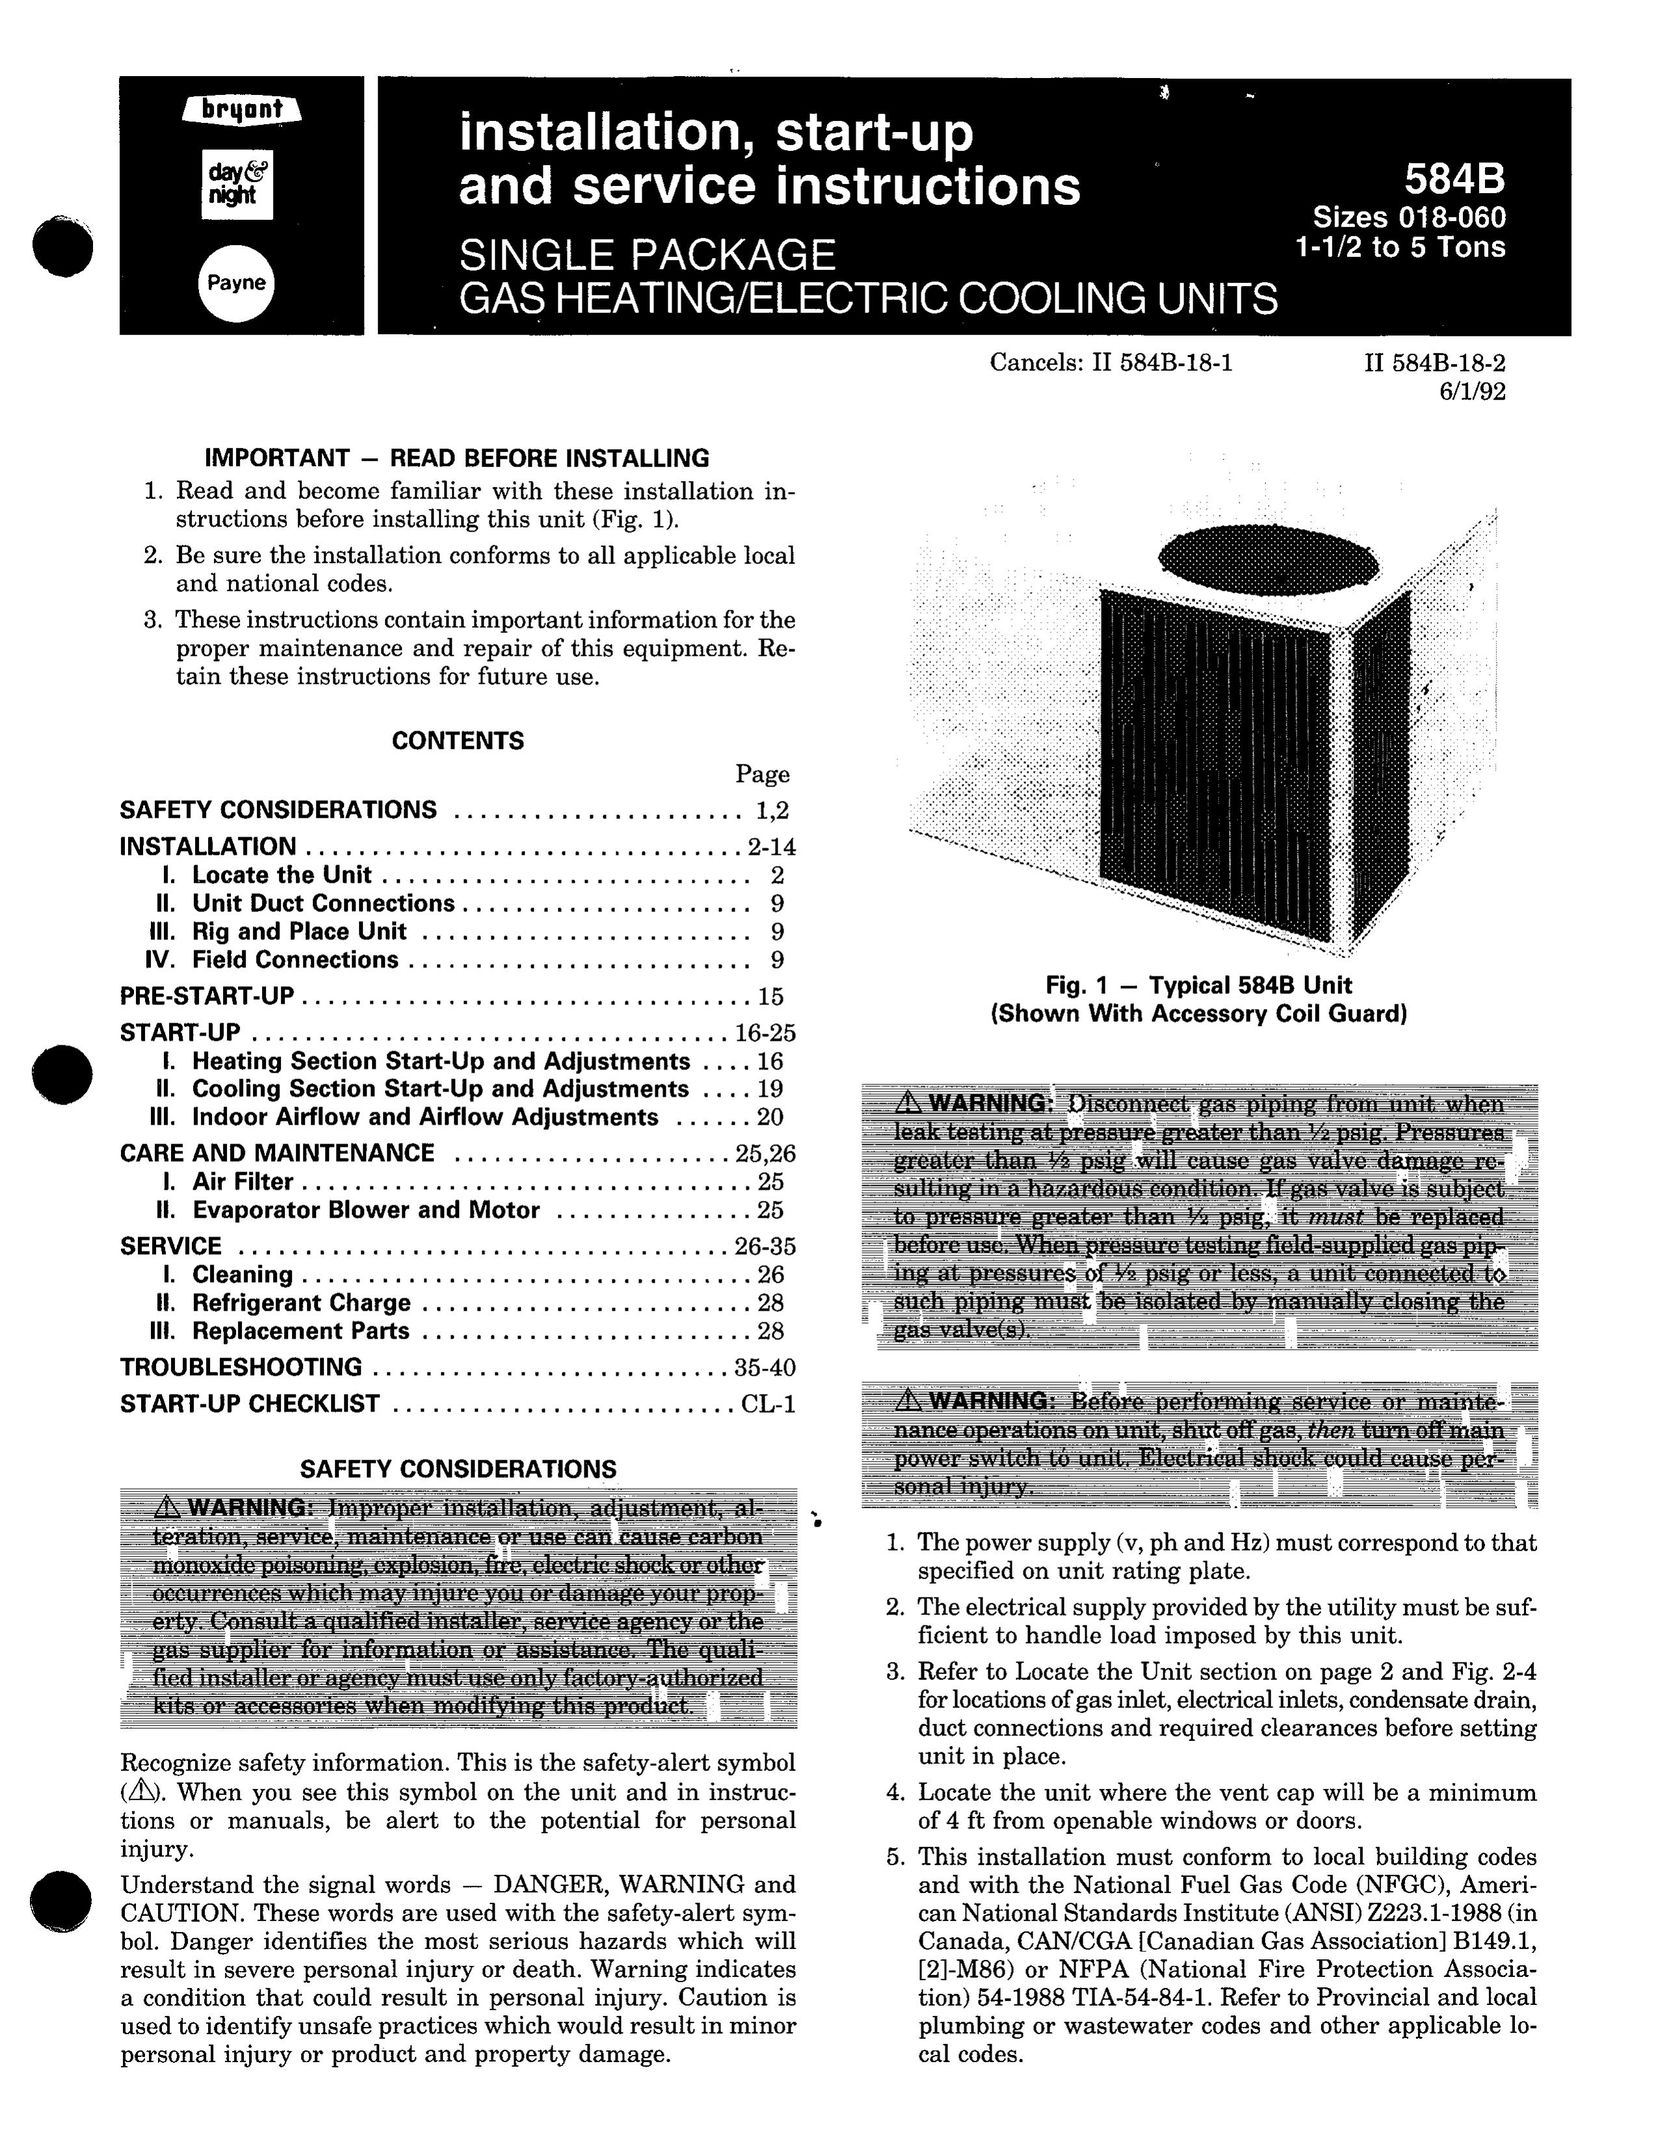 Bryant 584B Gas Heater User Manual